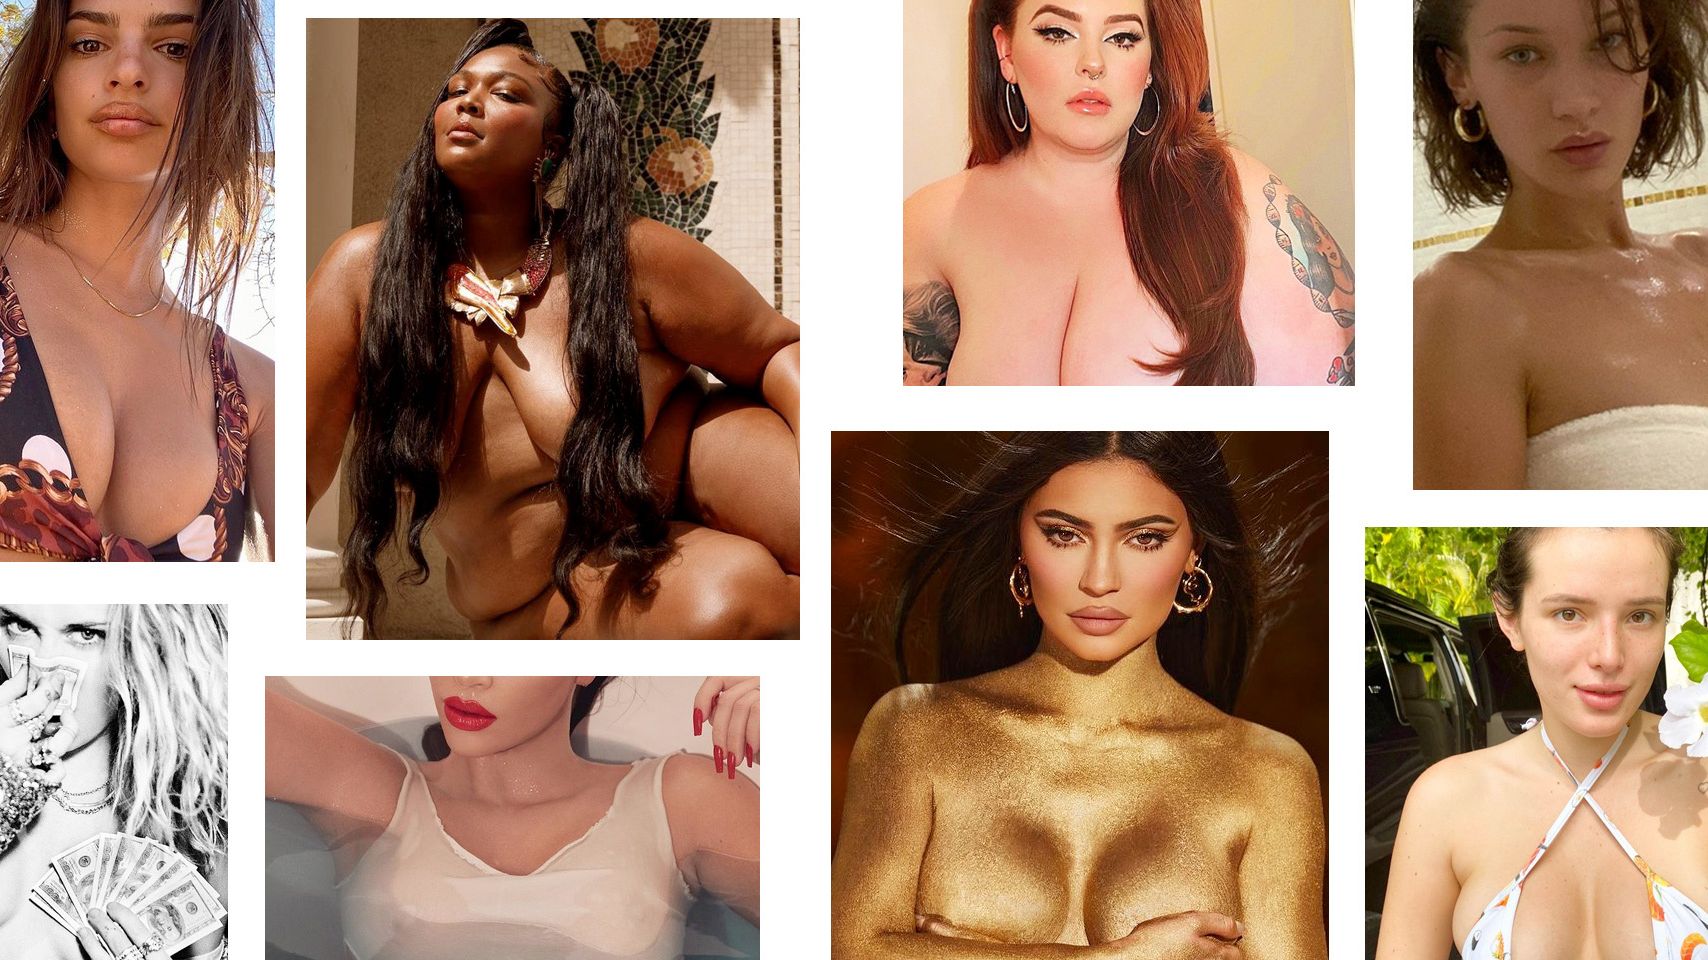 belinda merritt share most perfect tits ever photos